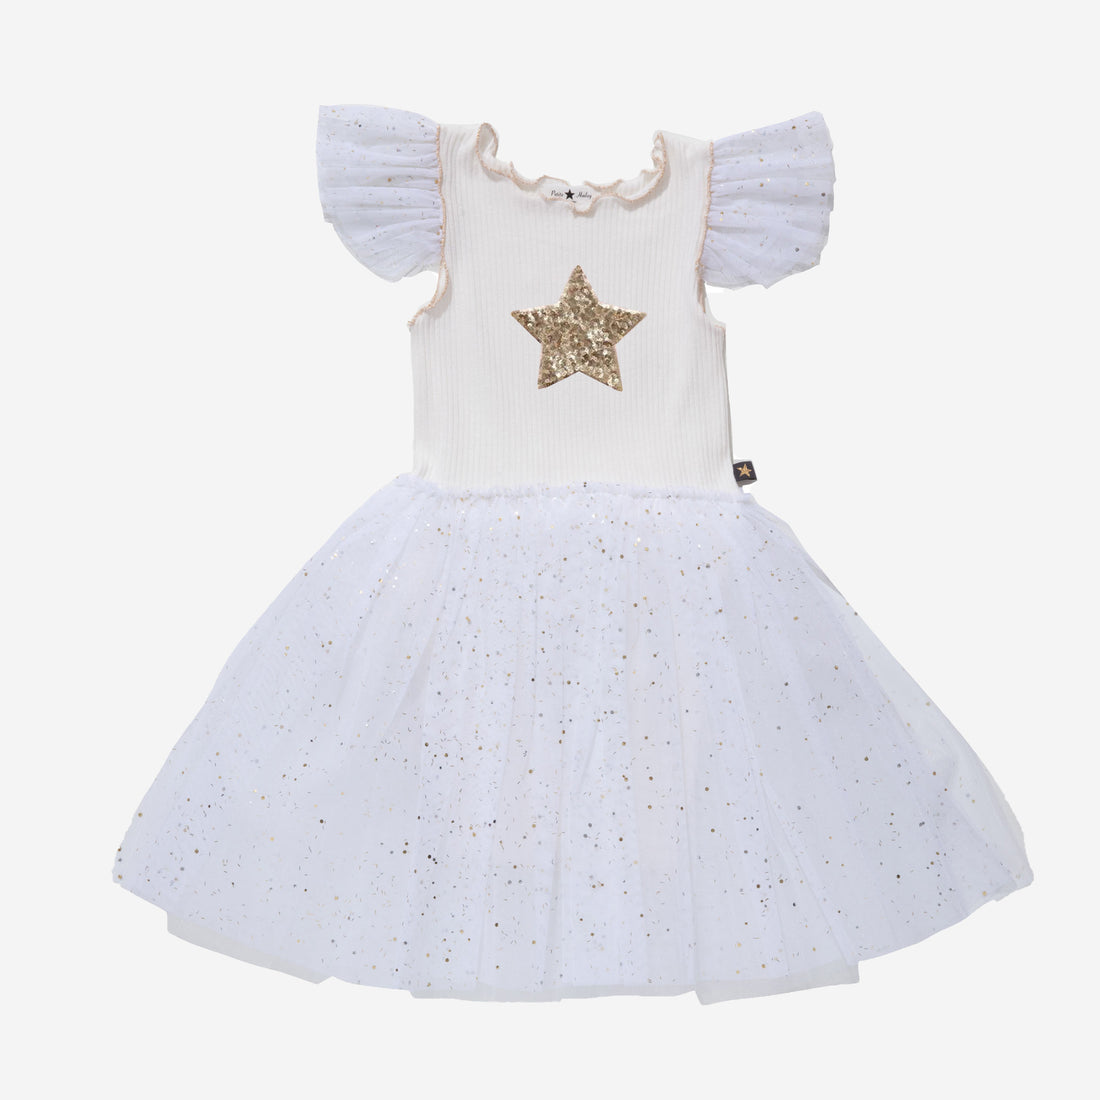 white sparkle tutu dress with gold star 